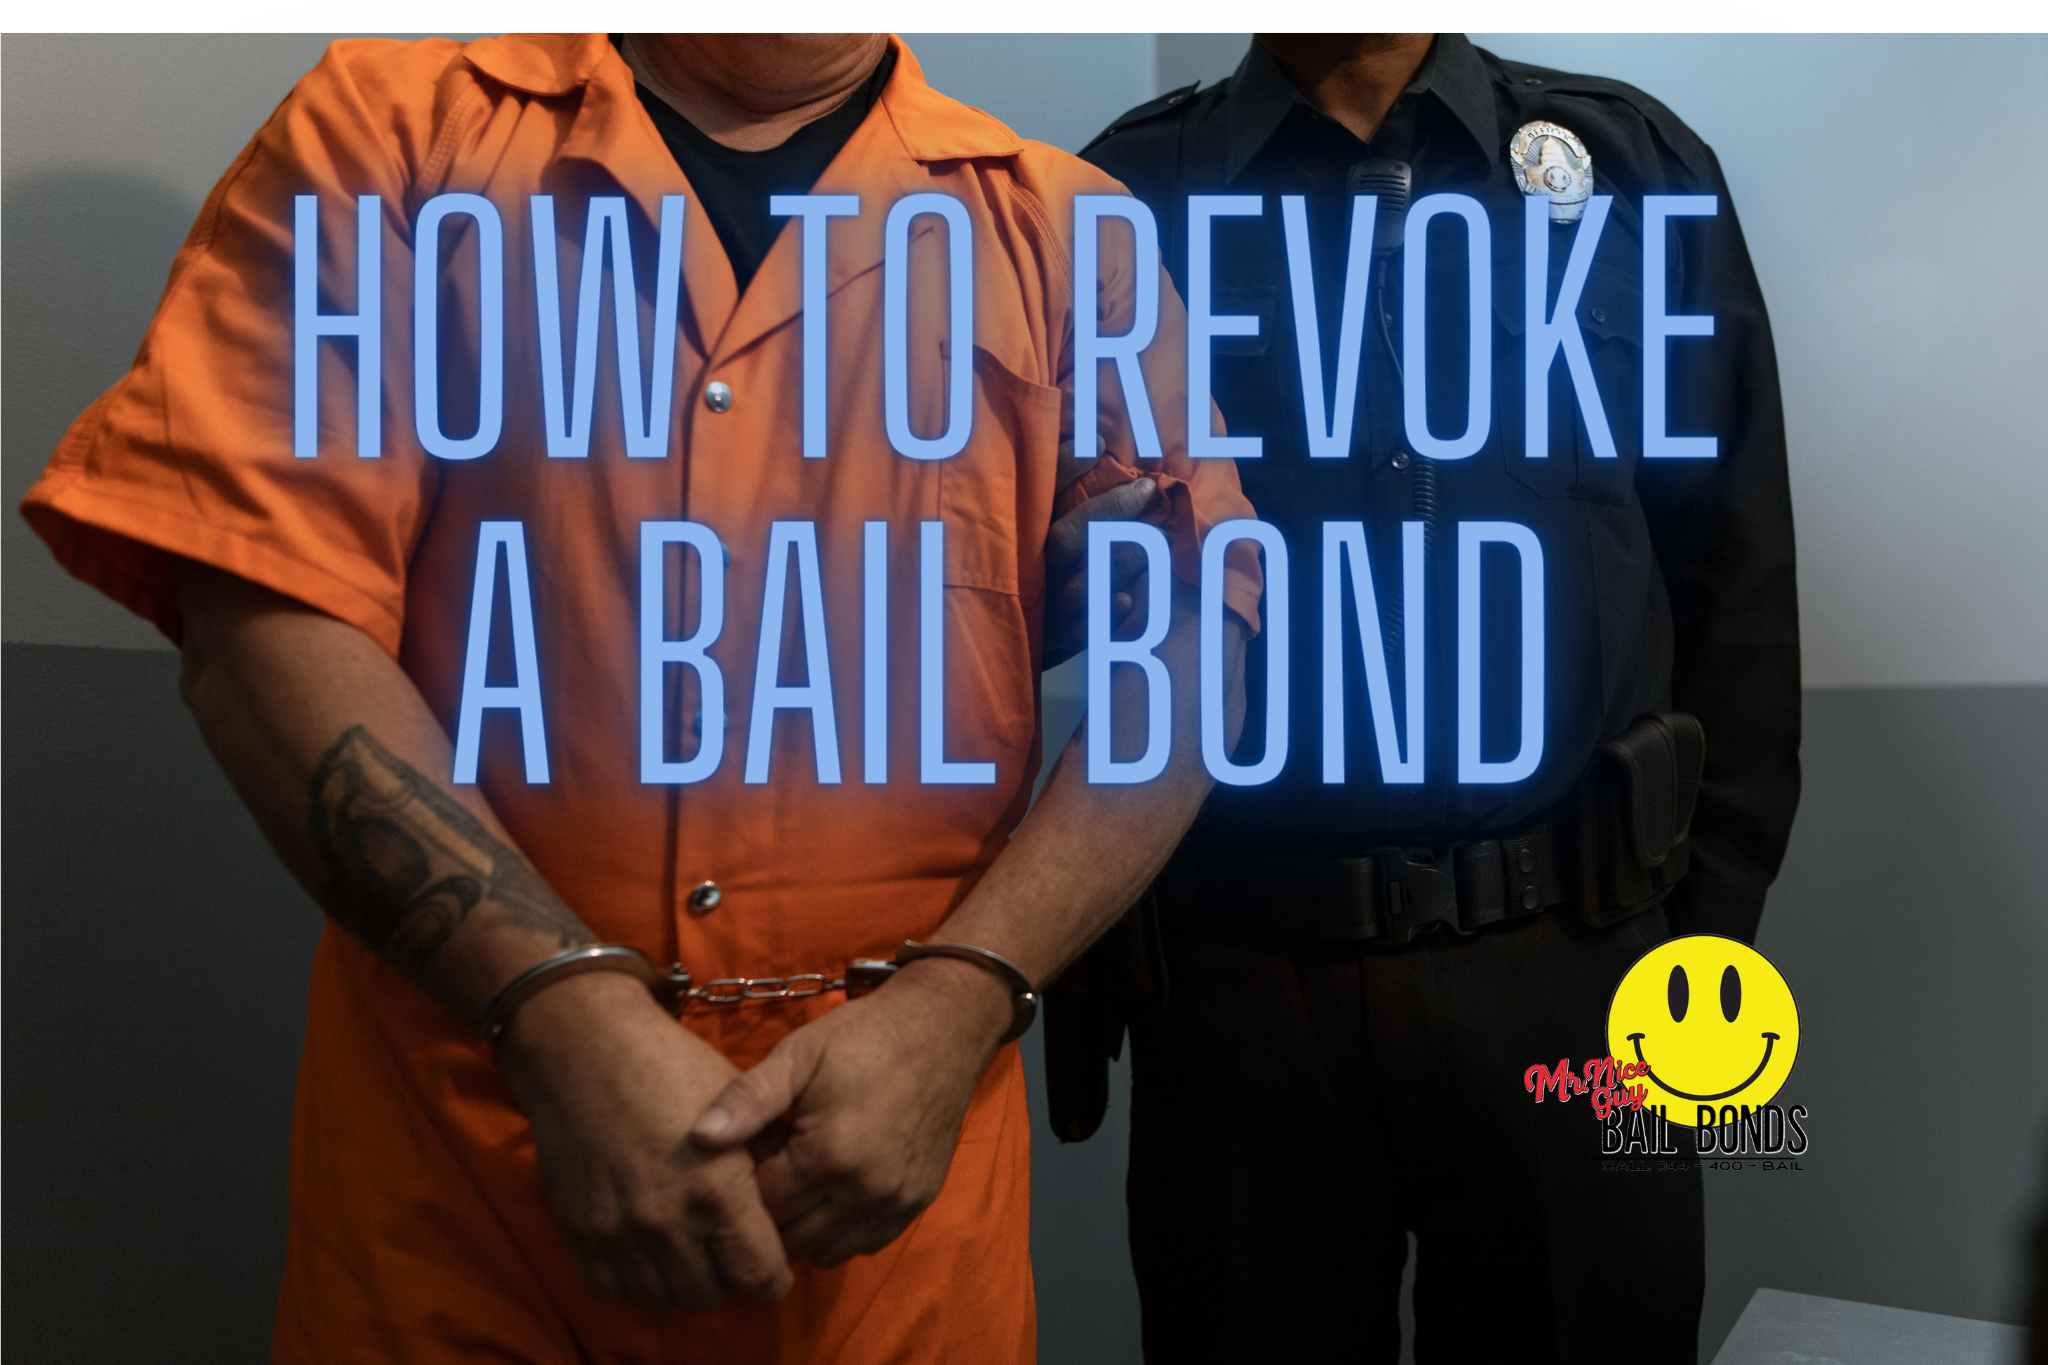 How to Revoke a Bail Bond